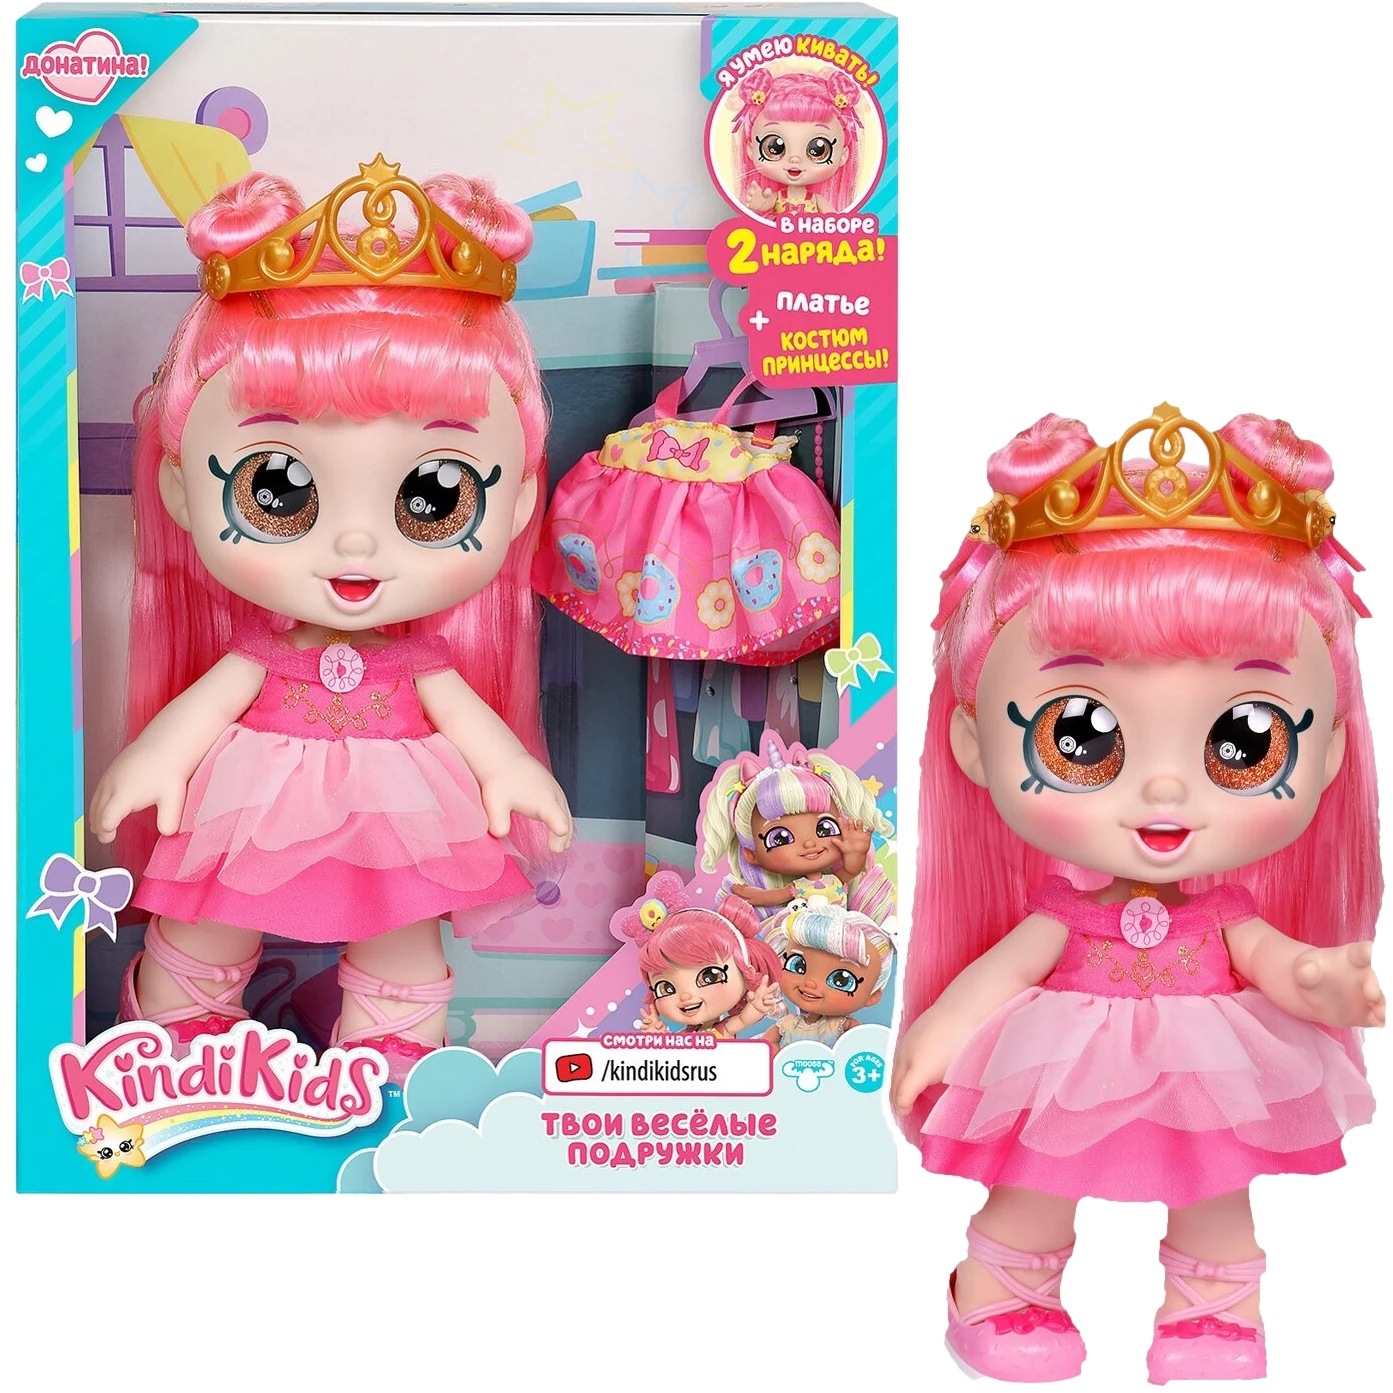 Кинди Кидс Игровой набор Кукла Донатина Принцесса с акс. ТМ Kindi Kids 38835